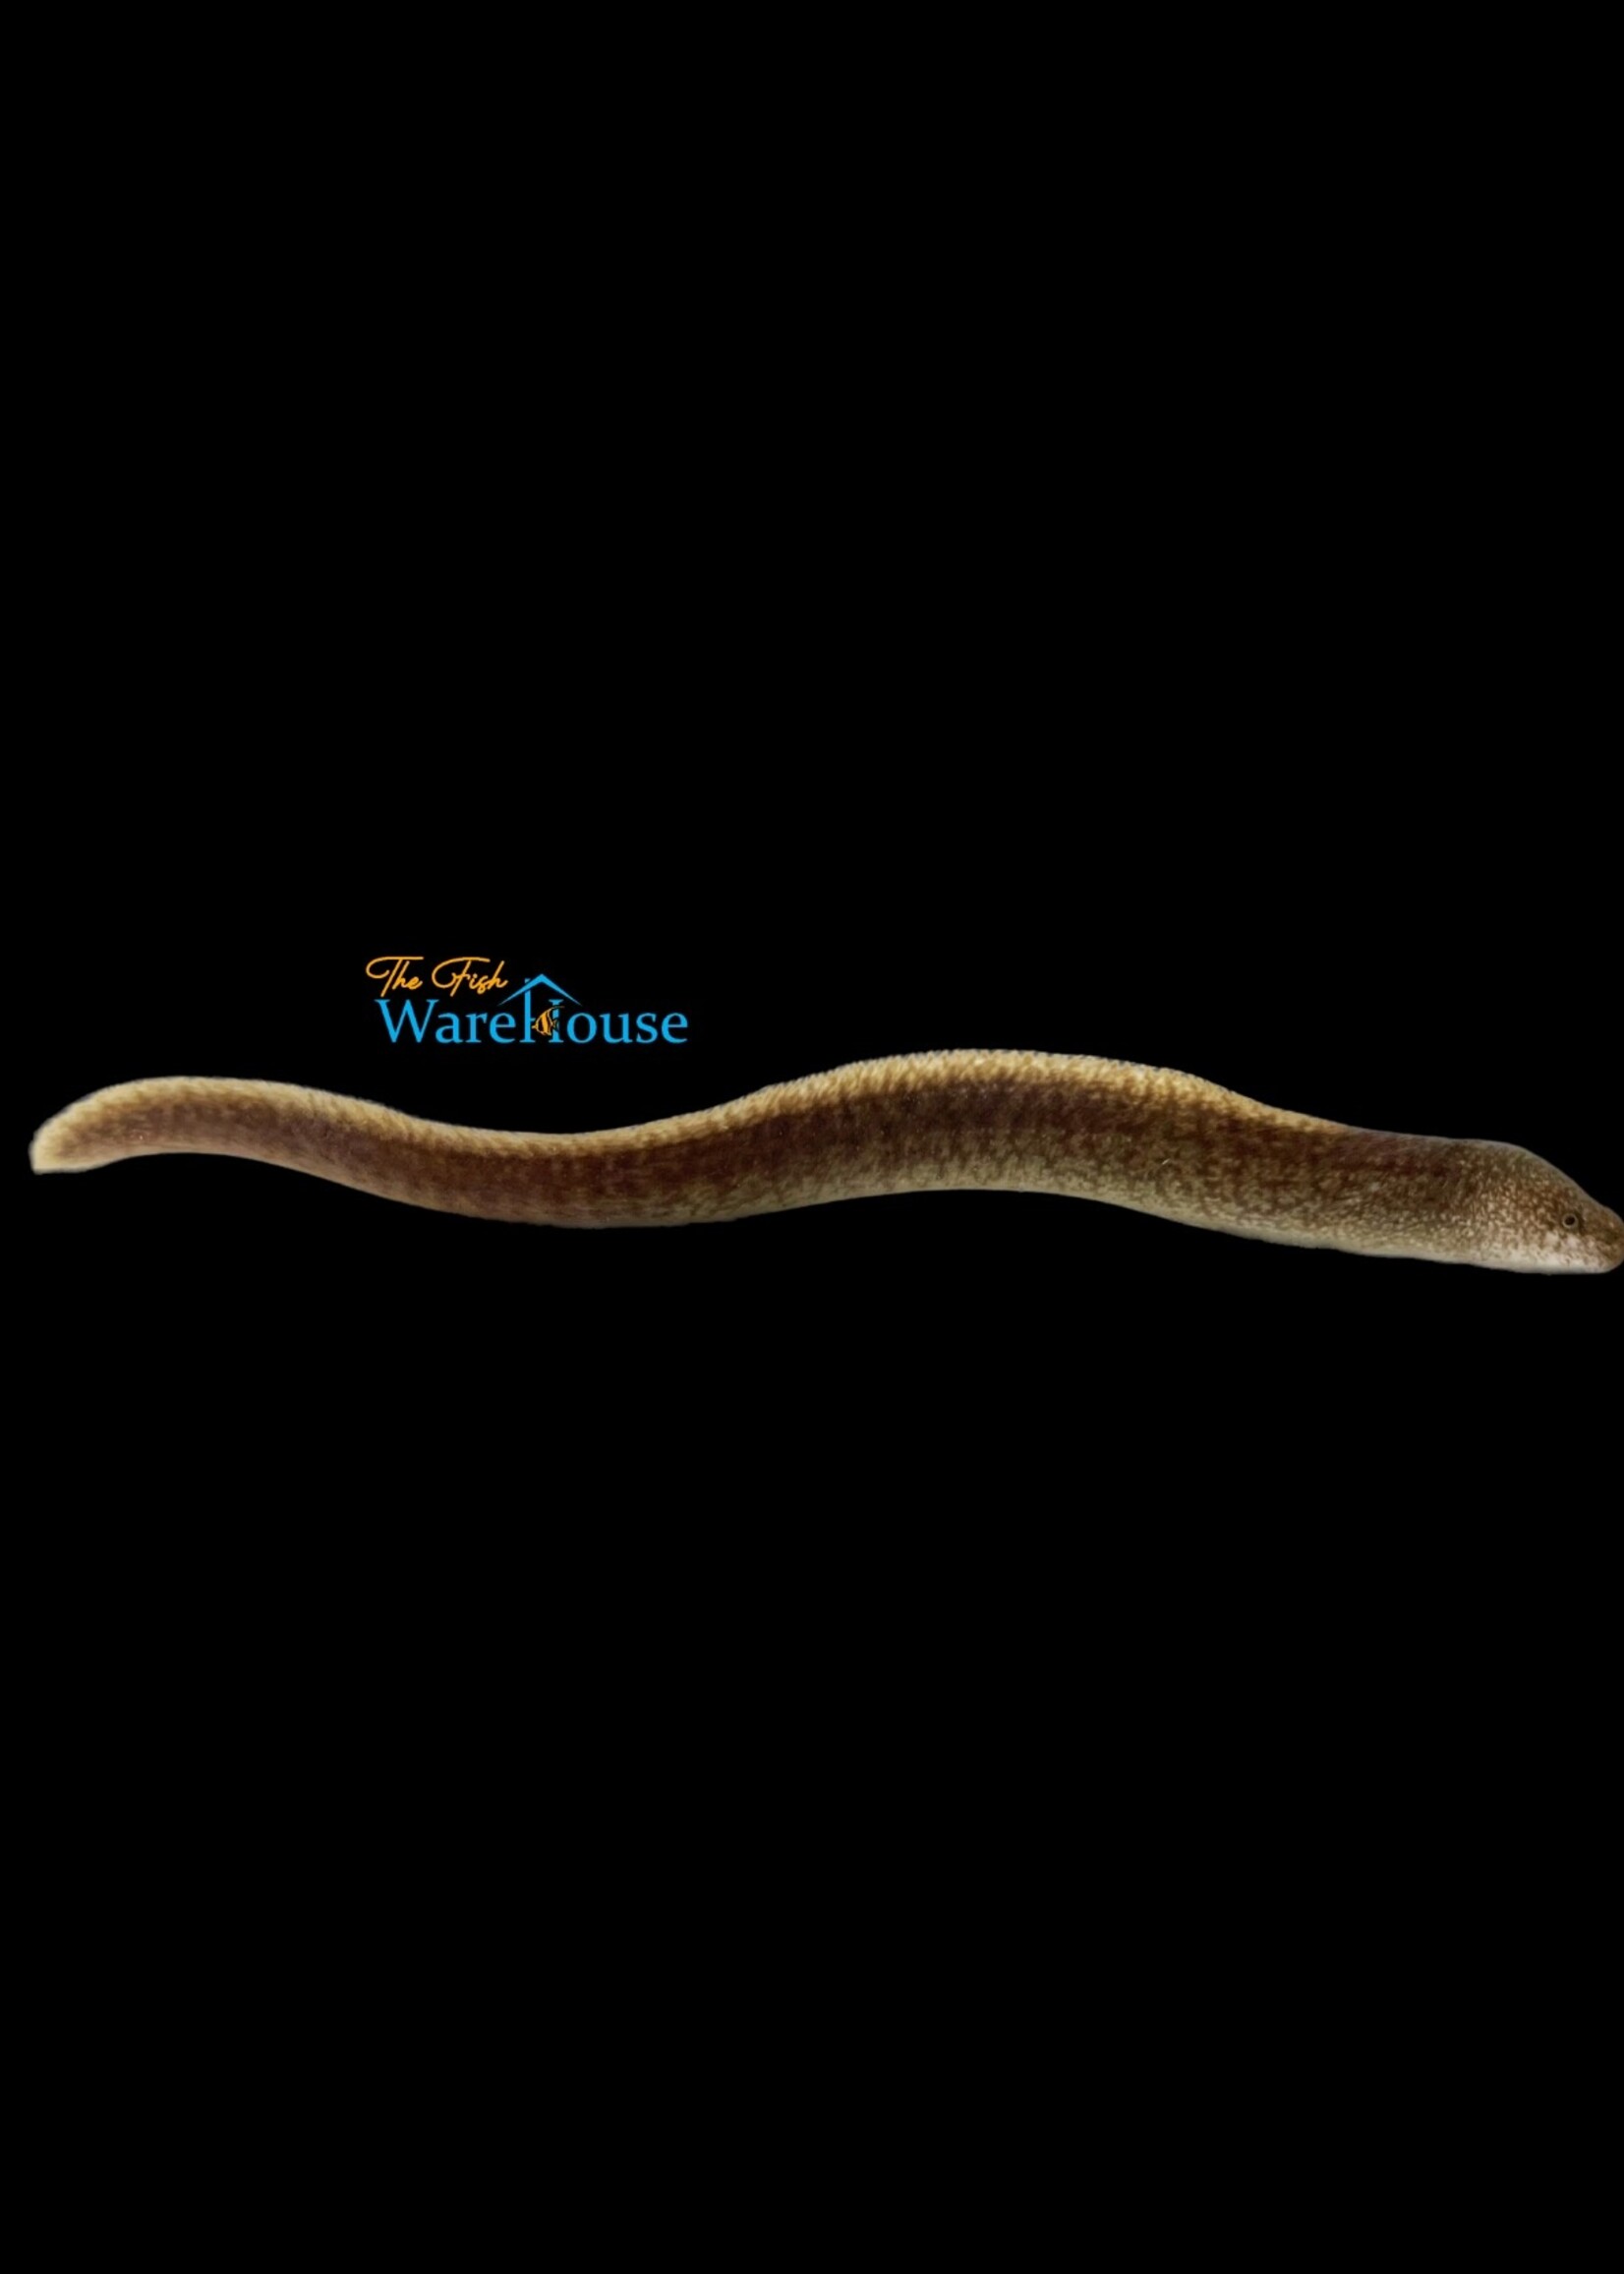 Highfin Moray Eel (Gymnothorax pseudothyrsoideus)